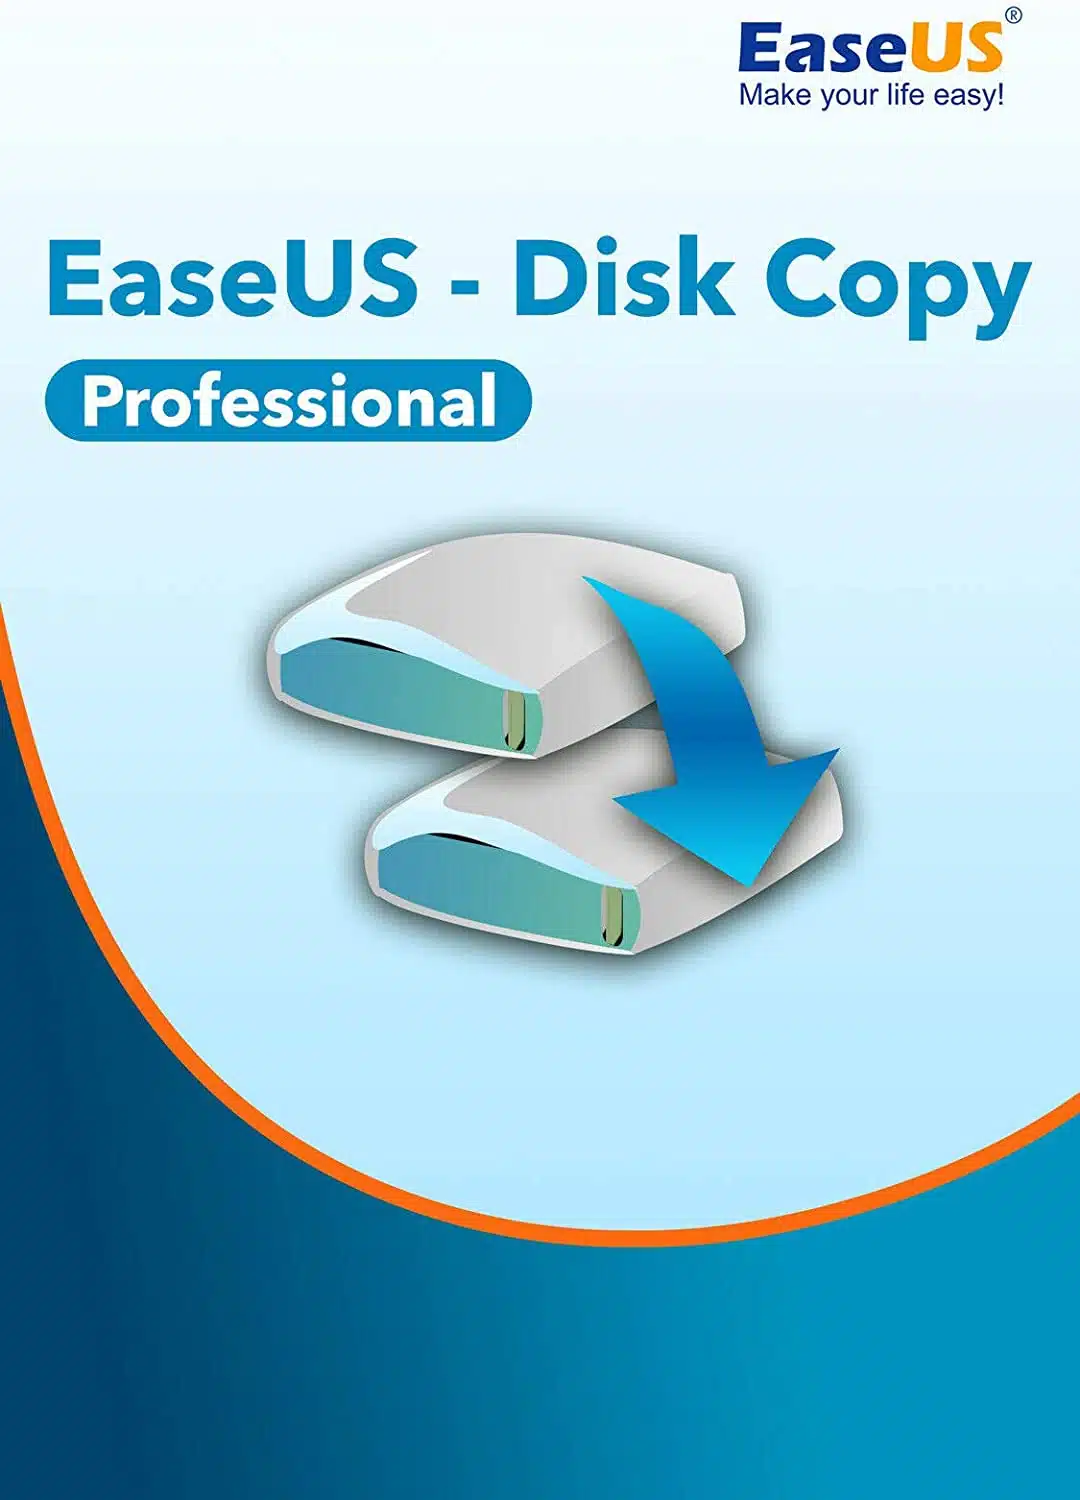 EaseUS Disk Copy  full version